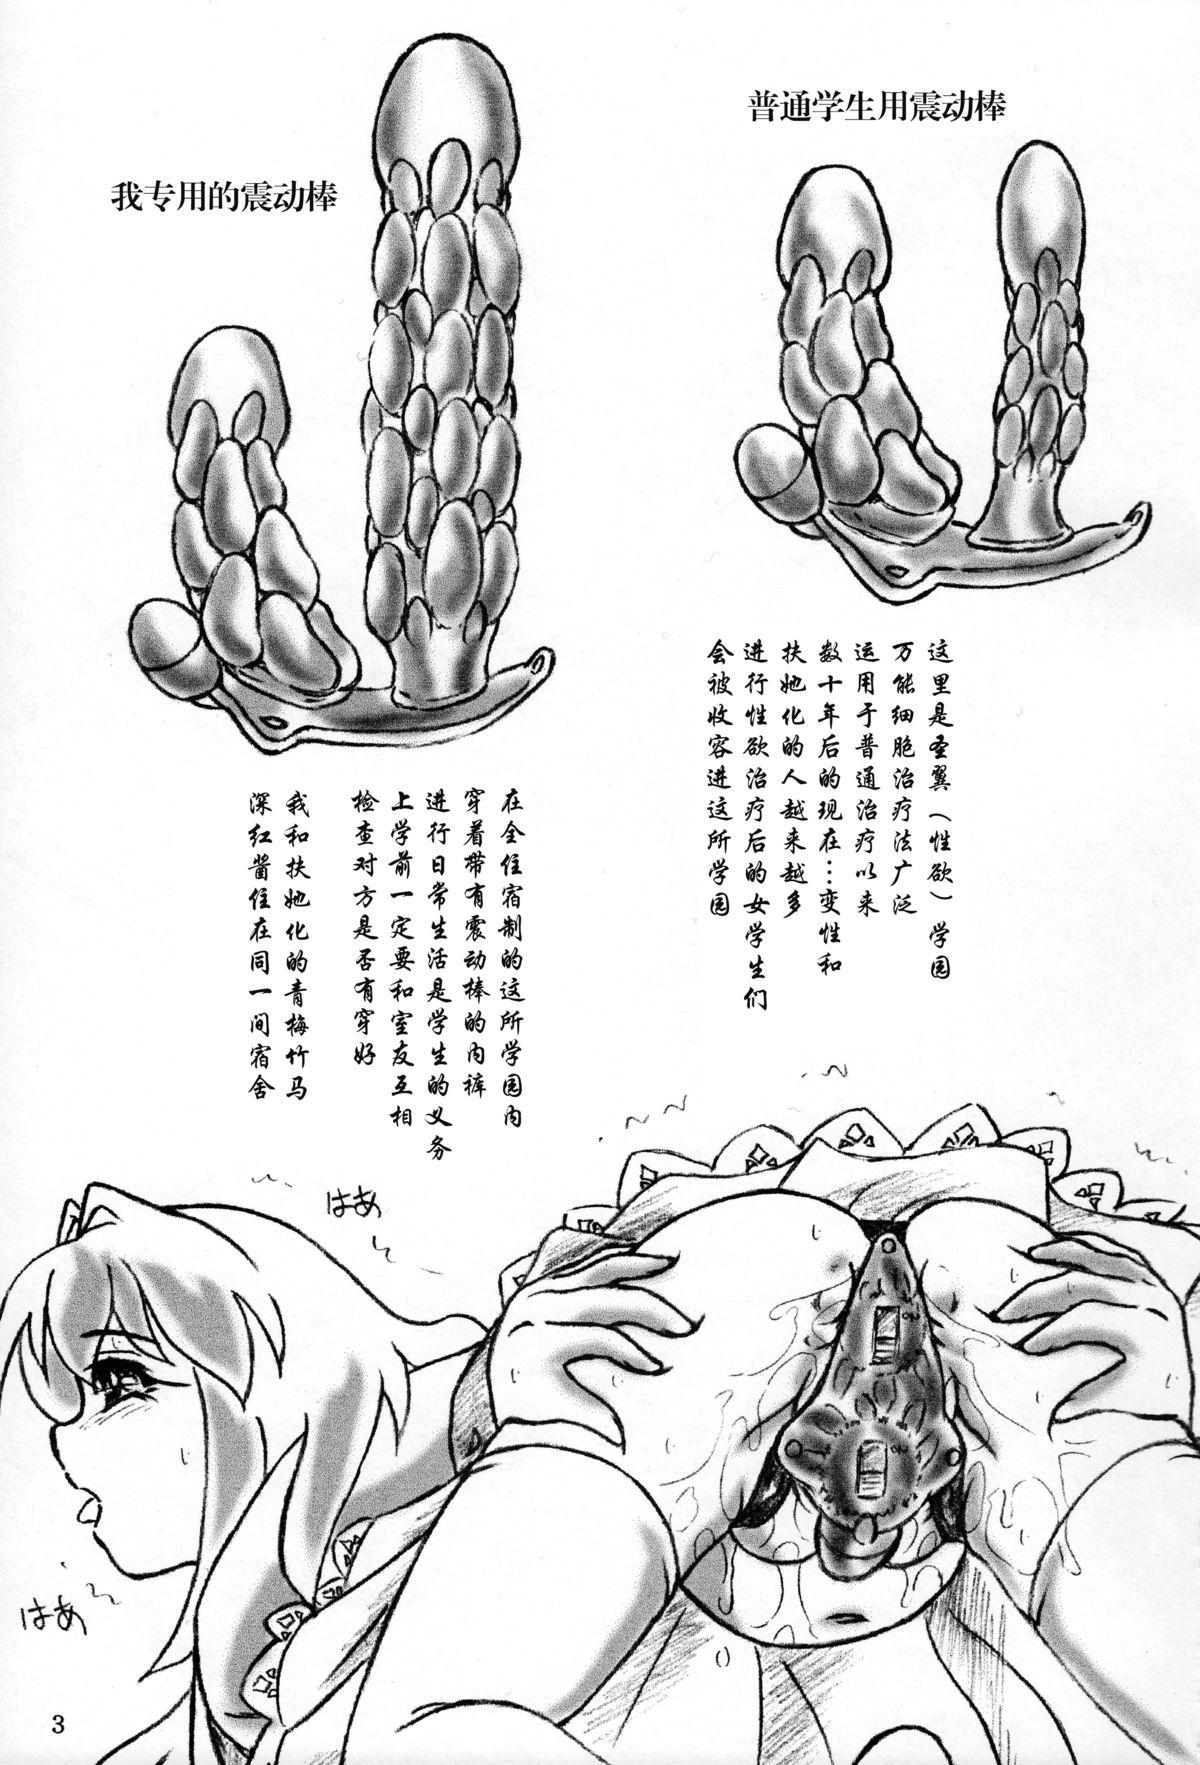 Weird Punipuni Seiyoku Gakuen Old Vs Young - Page 2